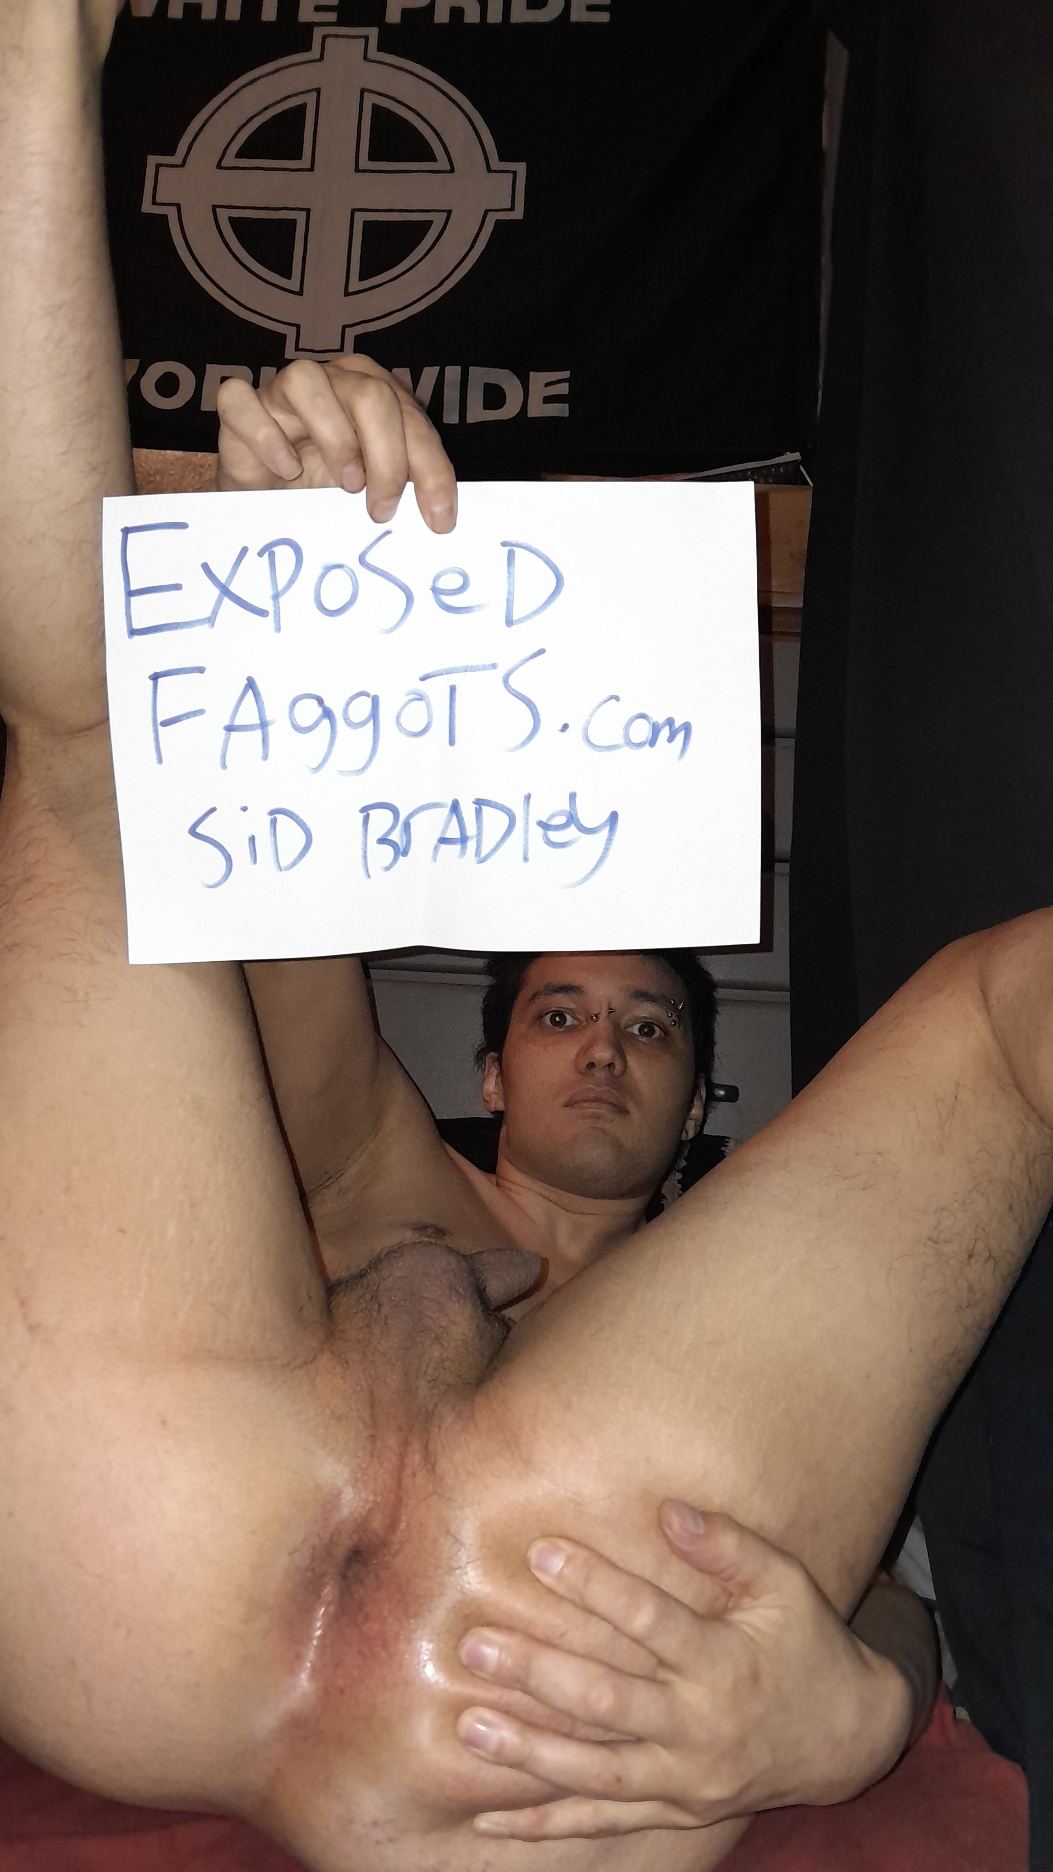 Sid Bradley exposedfaggots.com pnp_fuckboy666